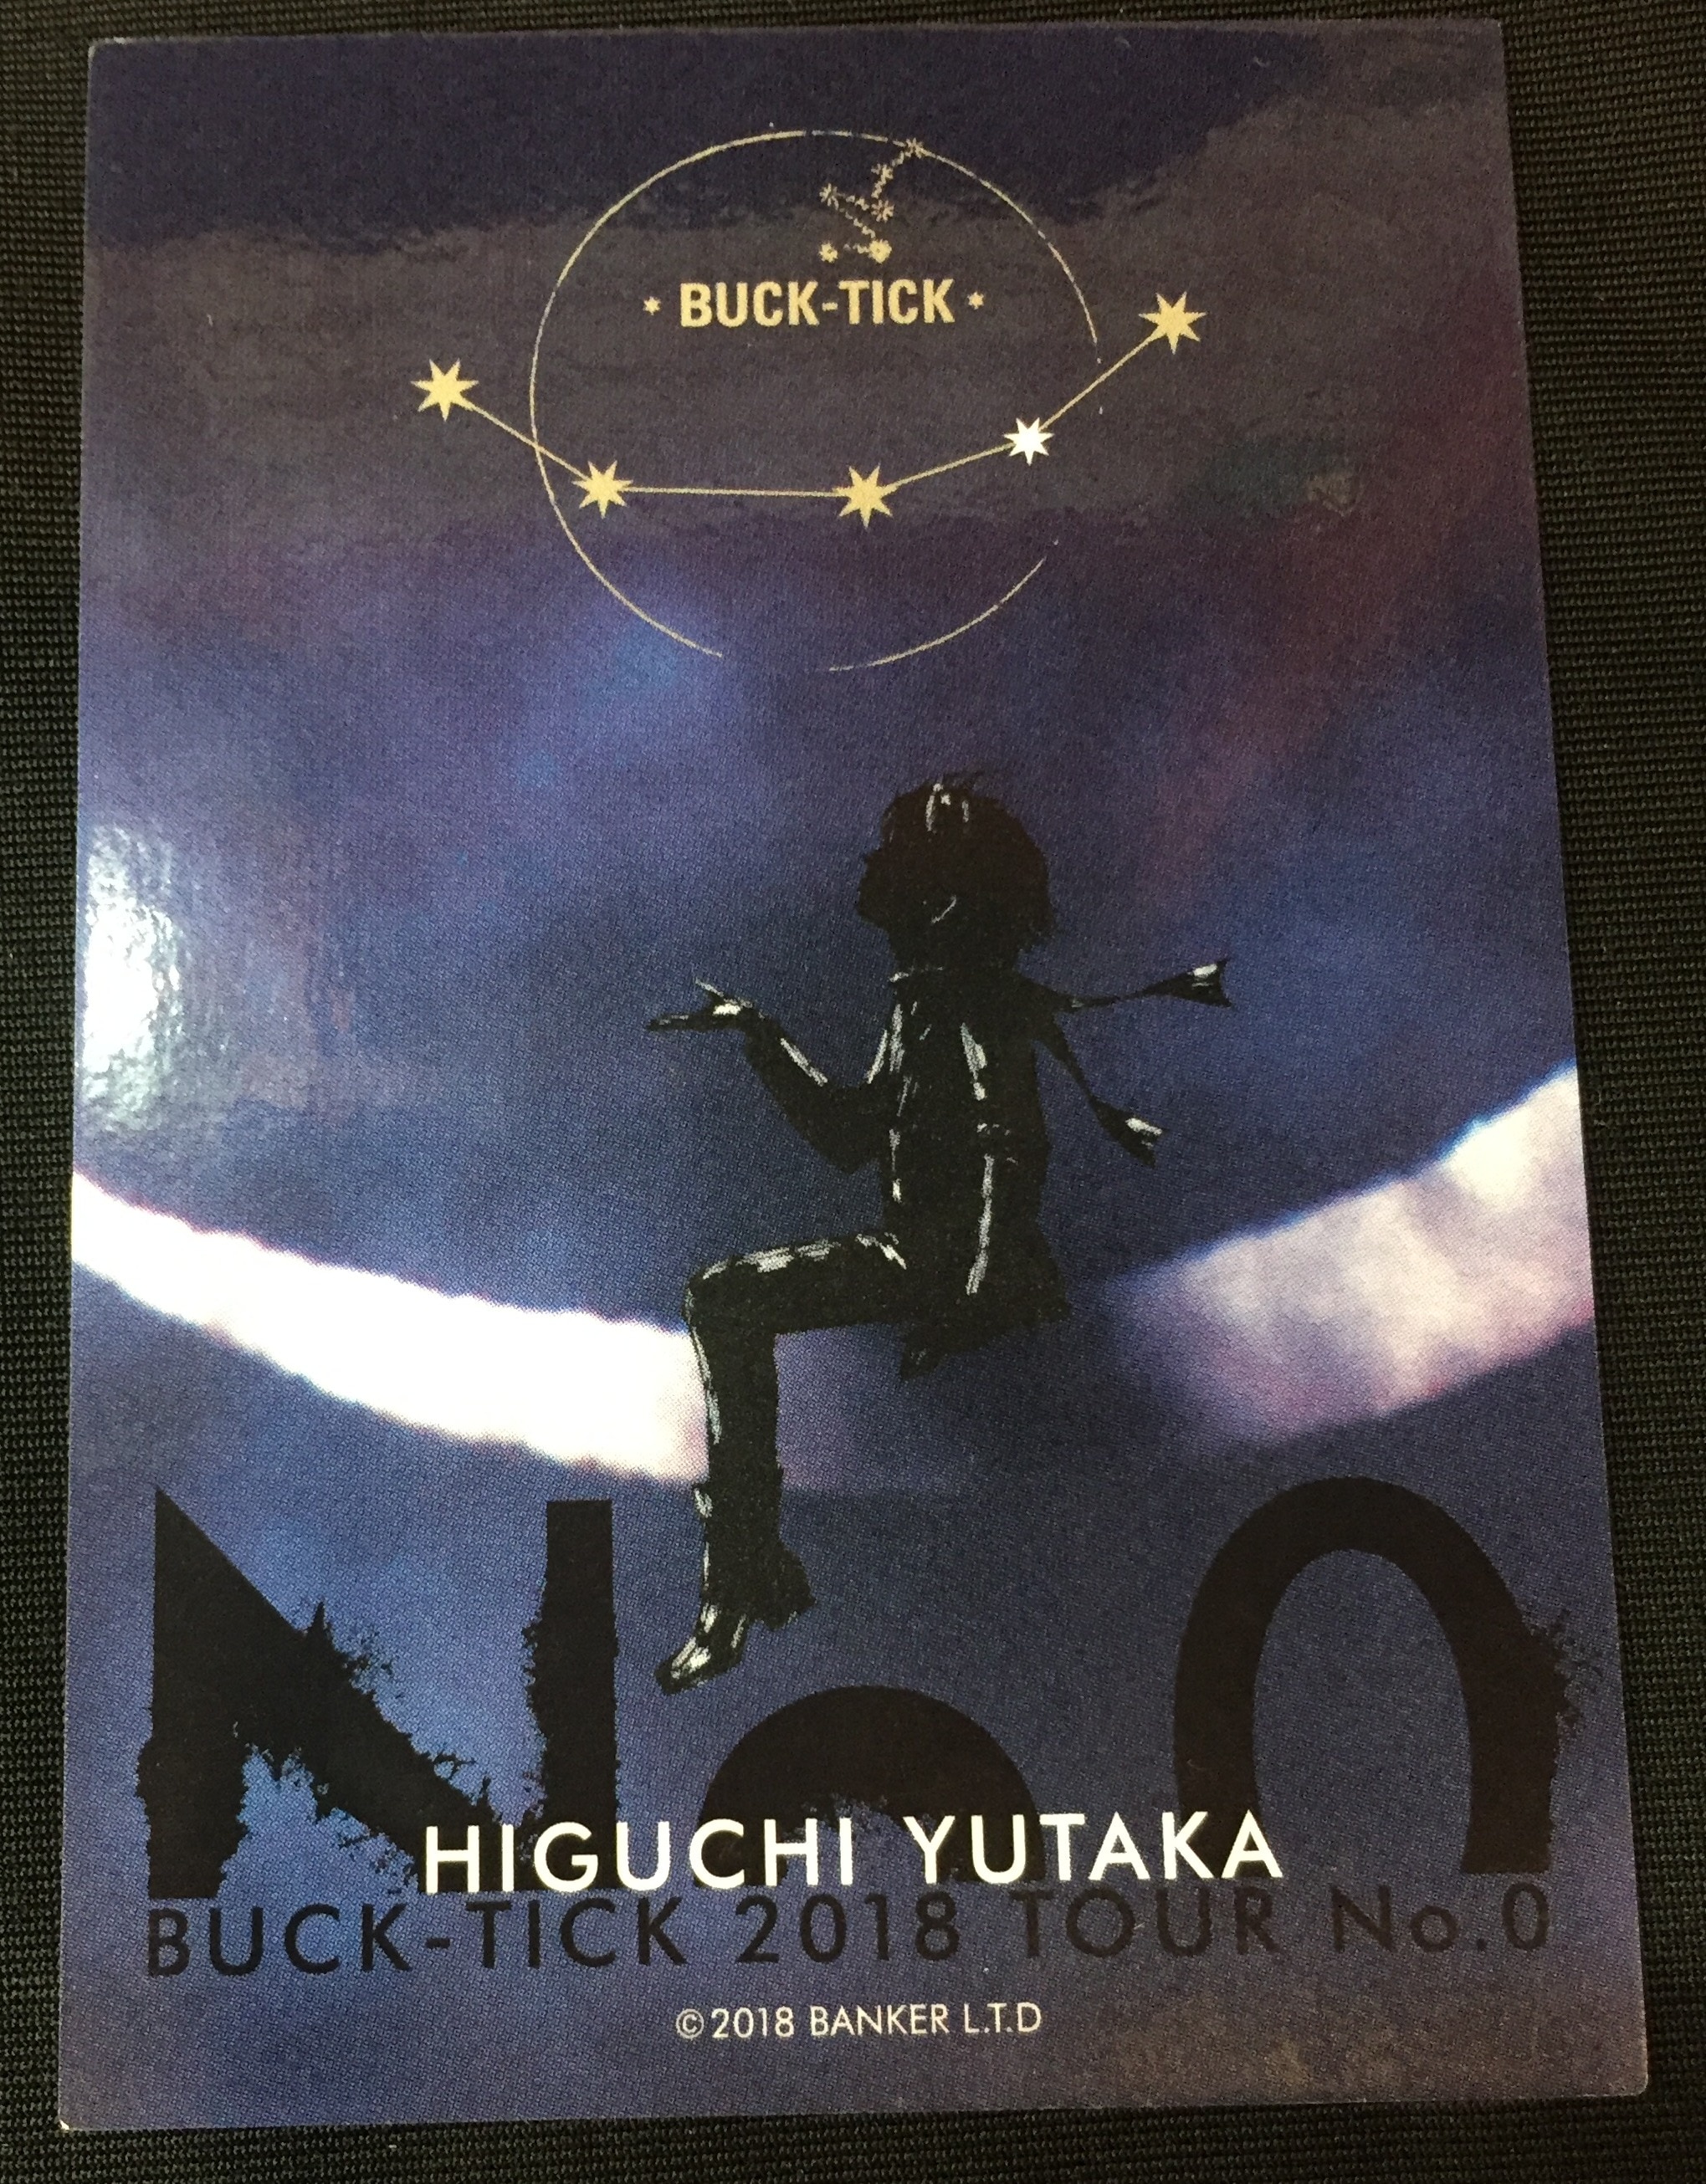 BUCK-TICK Random Trading Card Yutaka Higuchi / 2018 TOUR No.0 1 